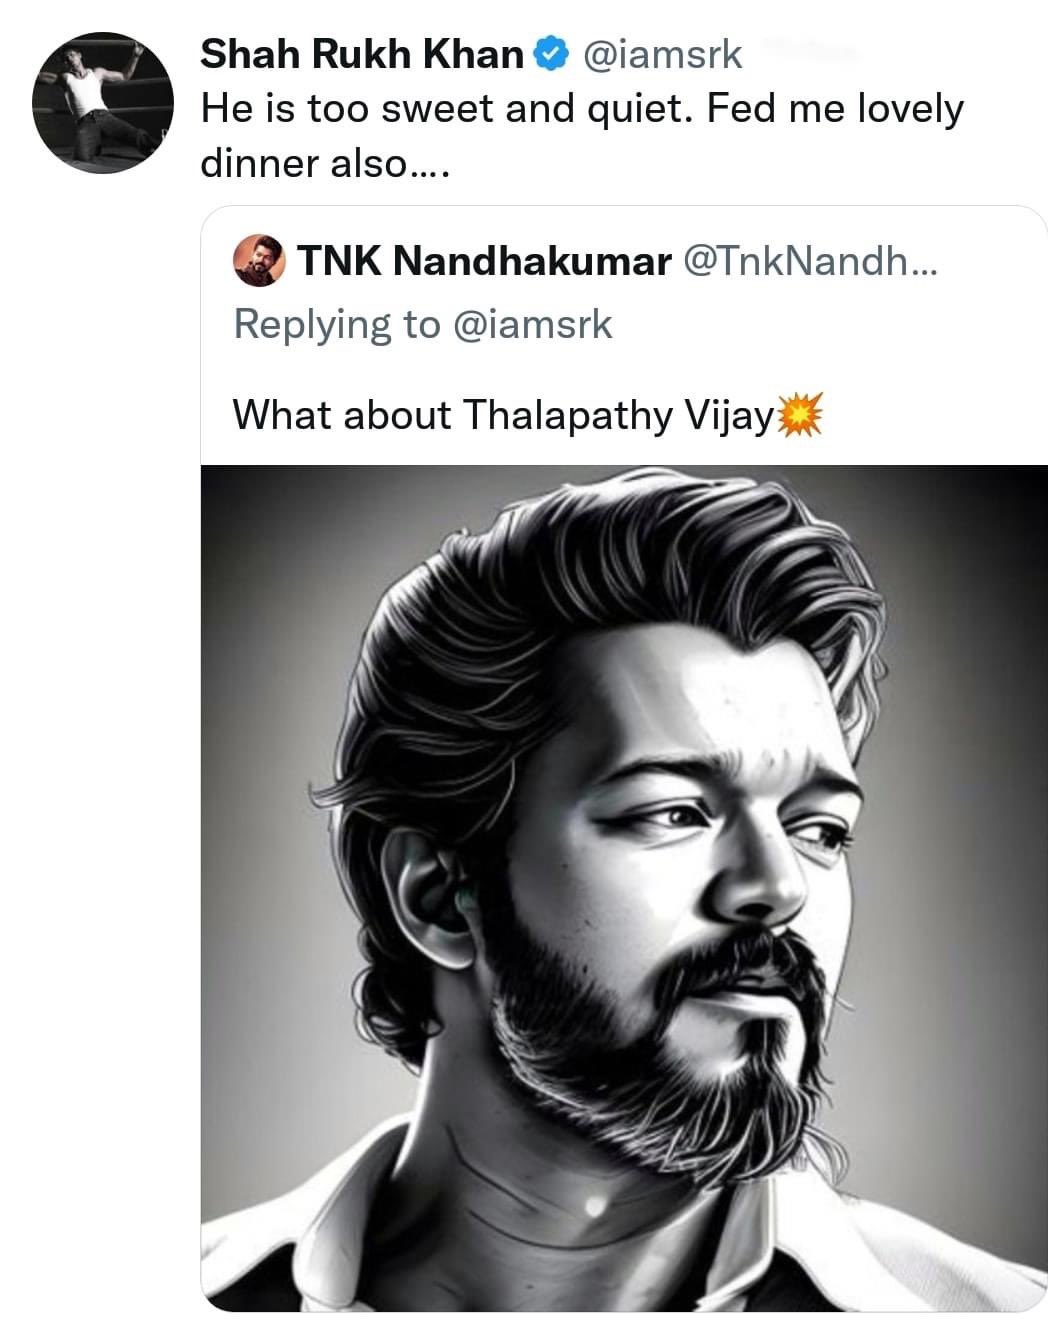 Shahrukh Khan Answered about Thalapathy Vijay on Twitter